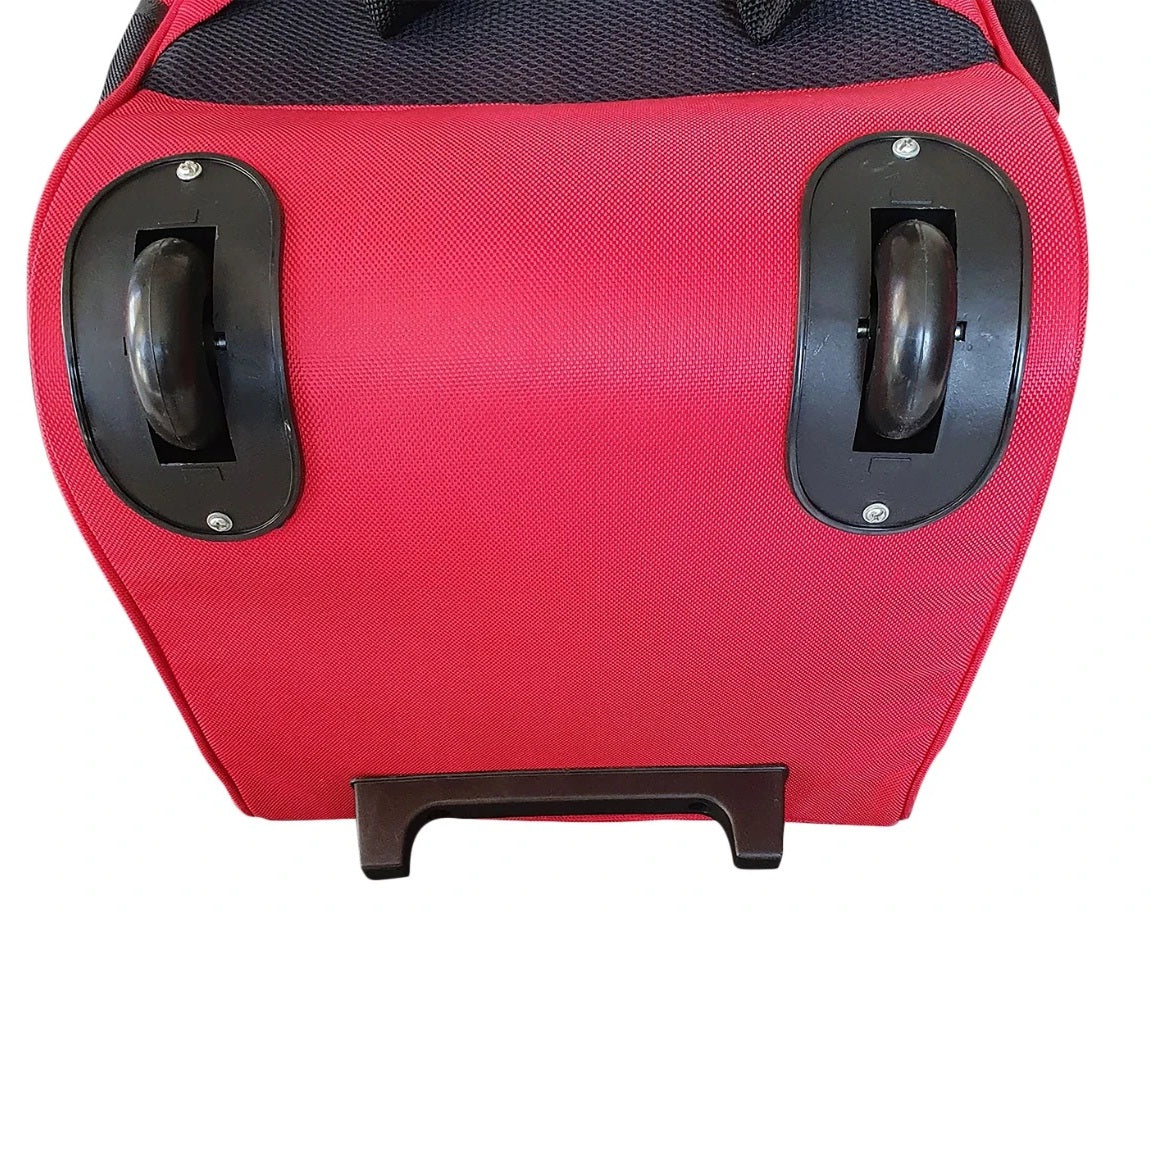 GA Pro Wheelie Kit Bag